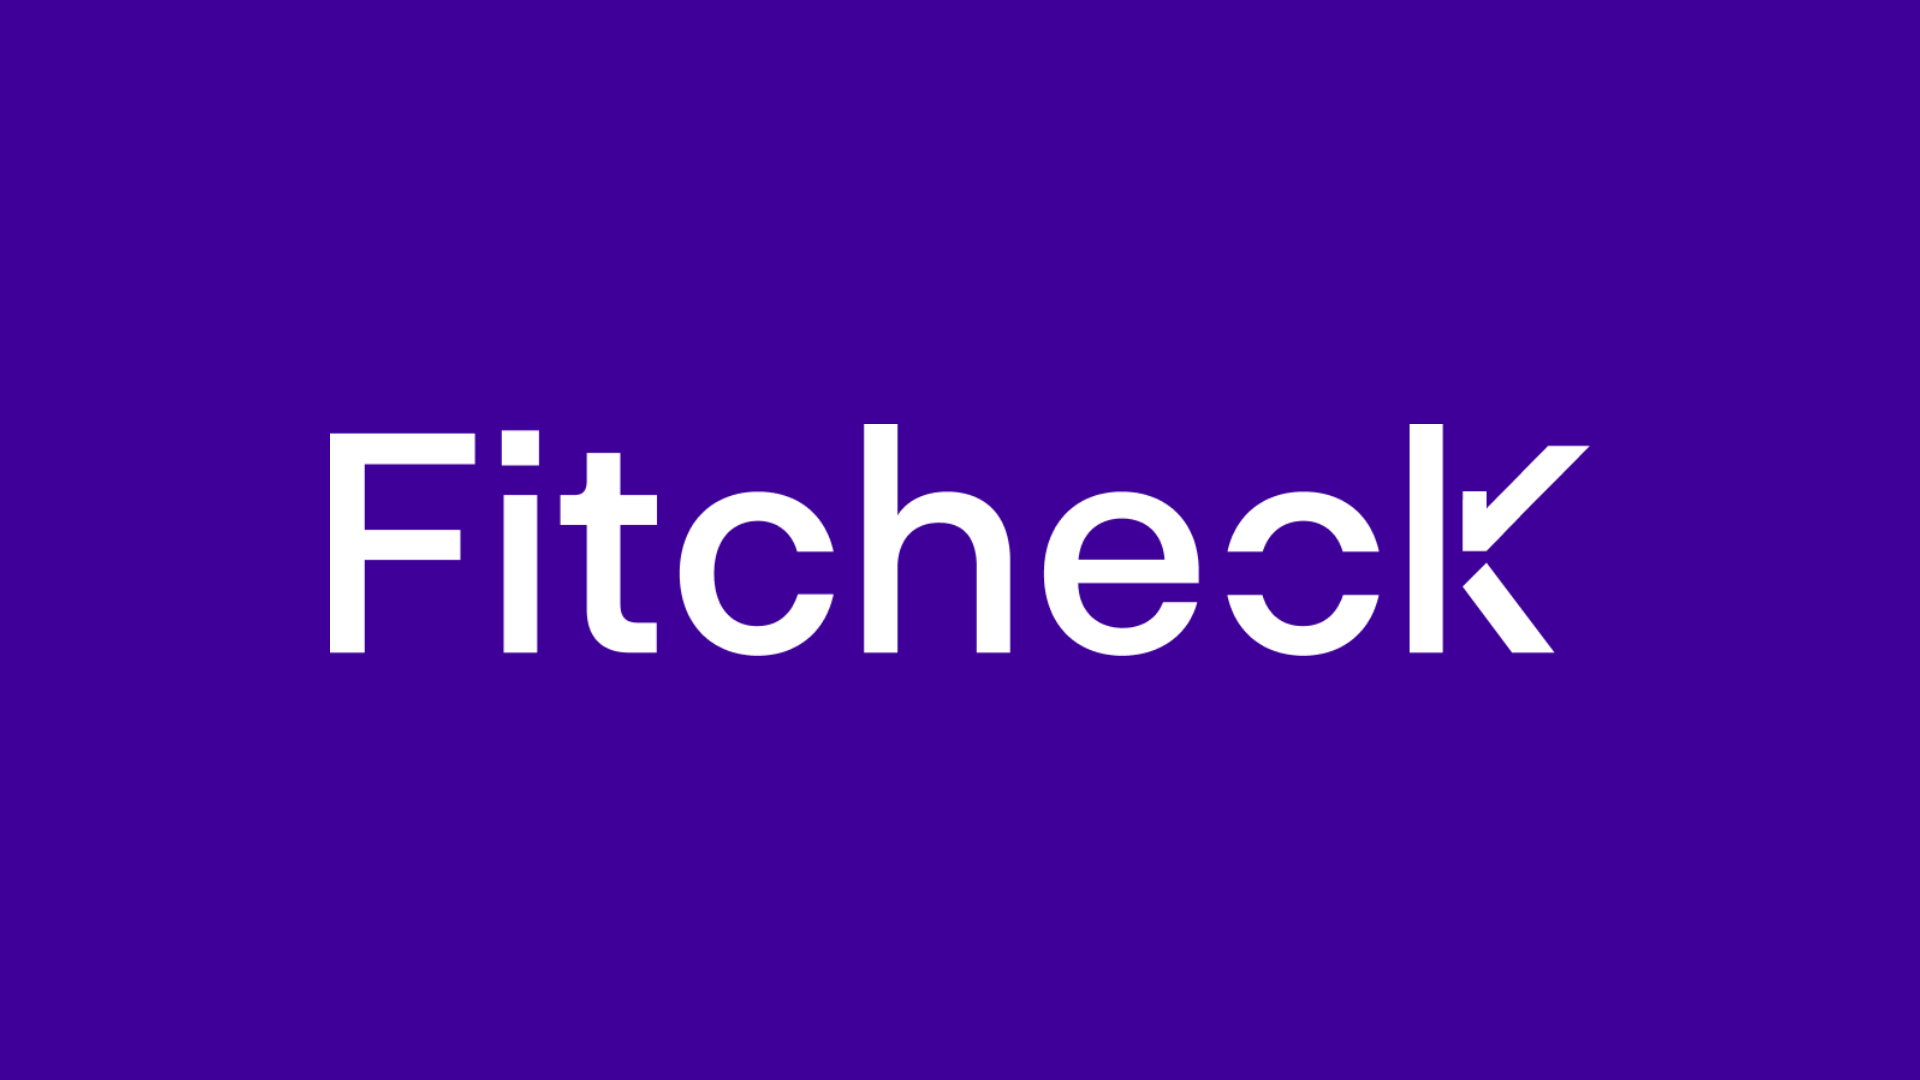 Fitcheck